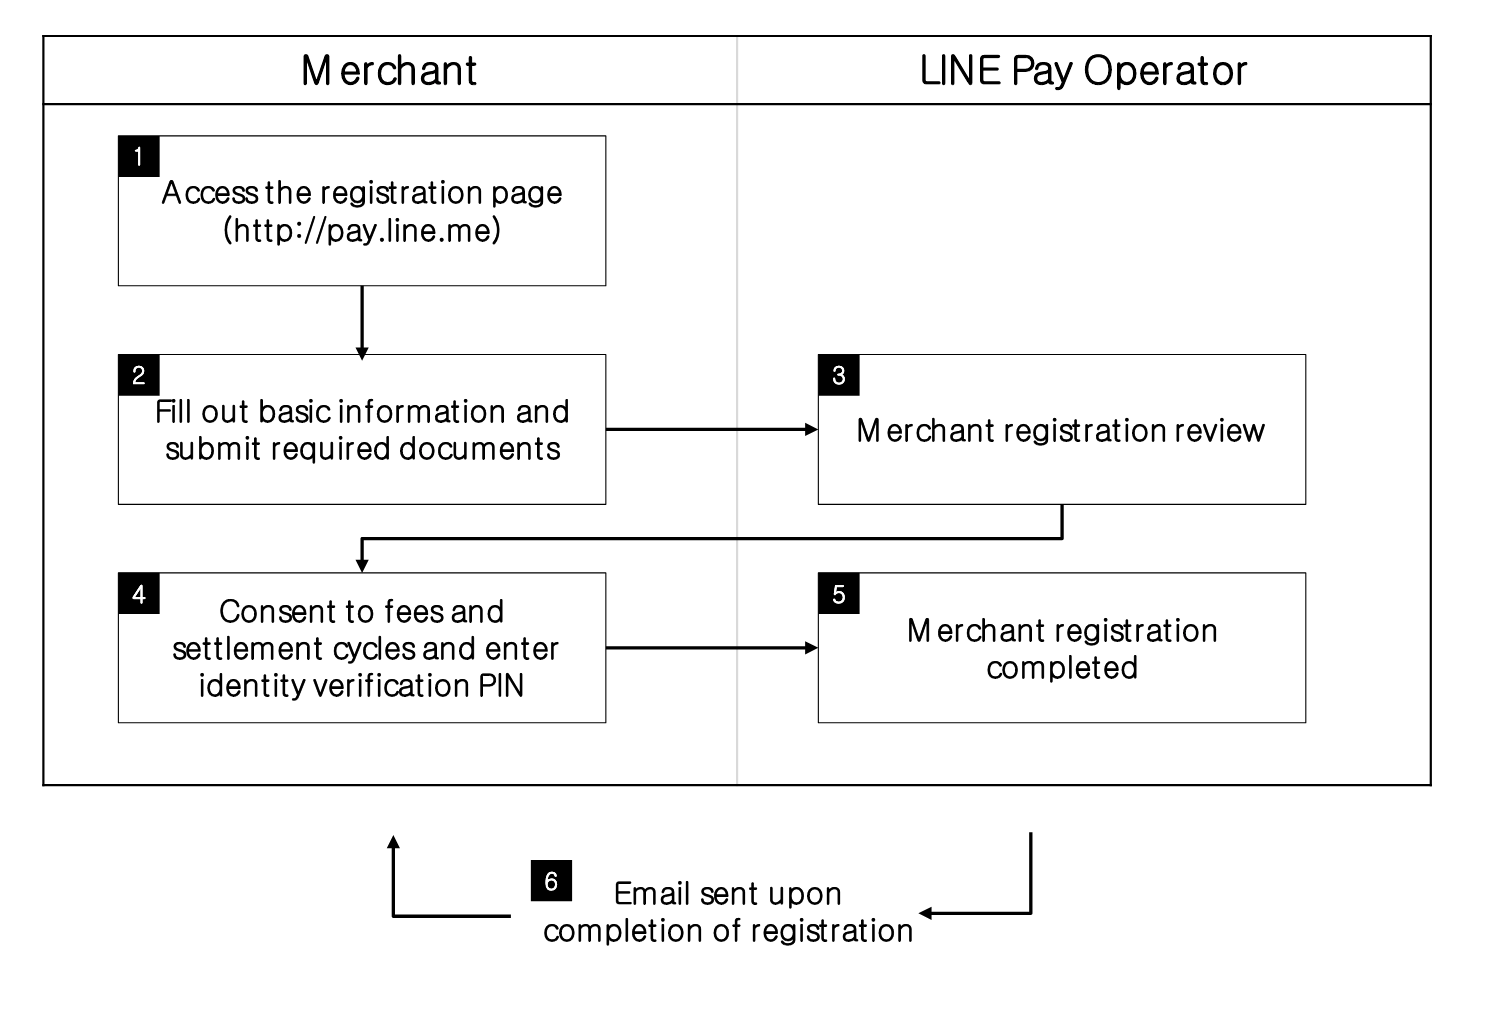 Register merchant process